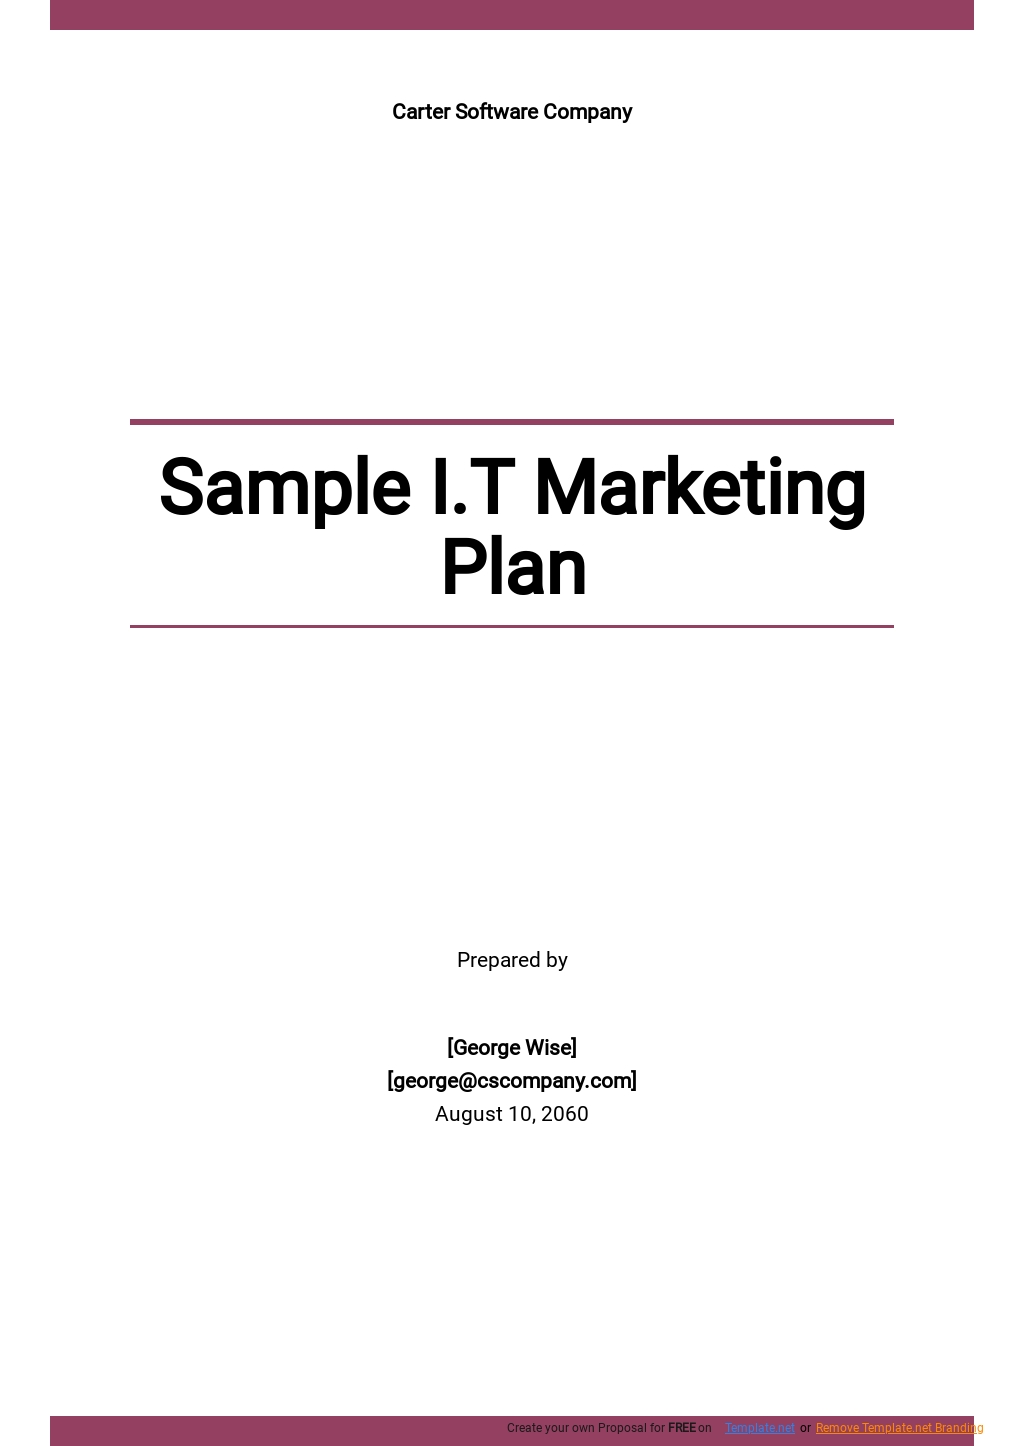 Free Sample I.T Marketing Plan Template 